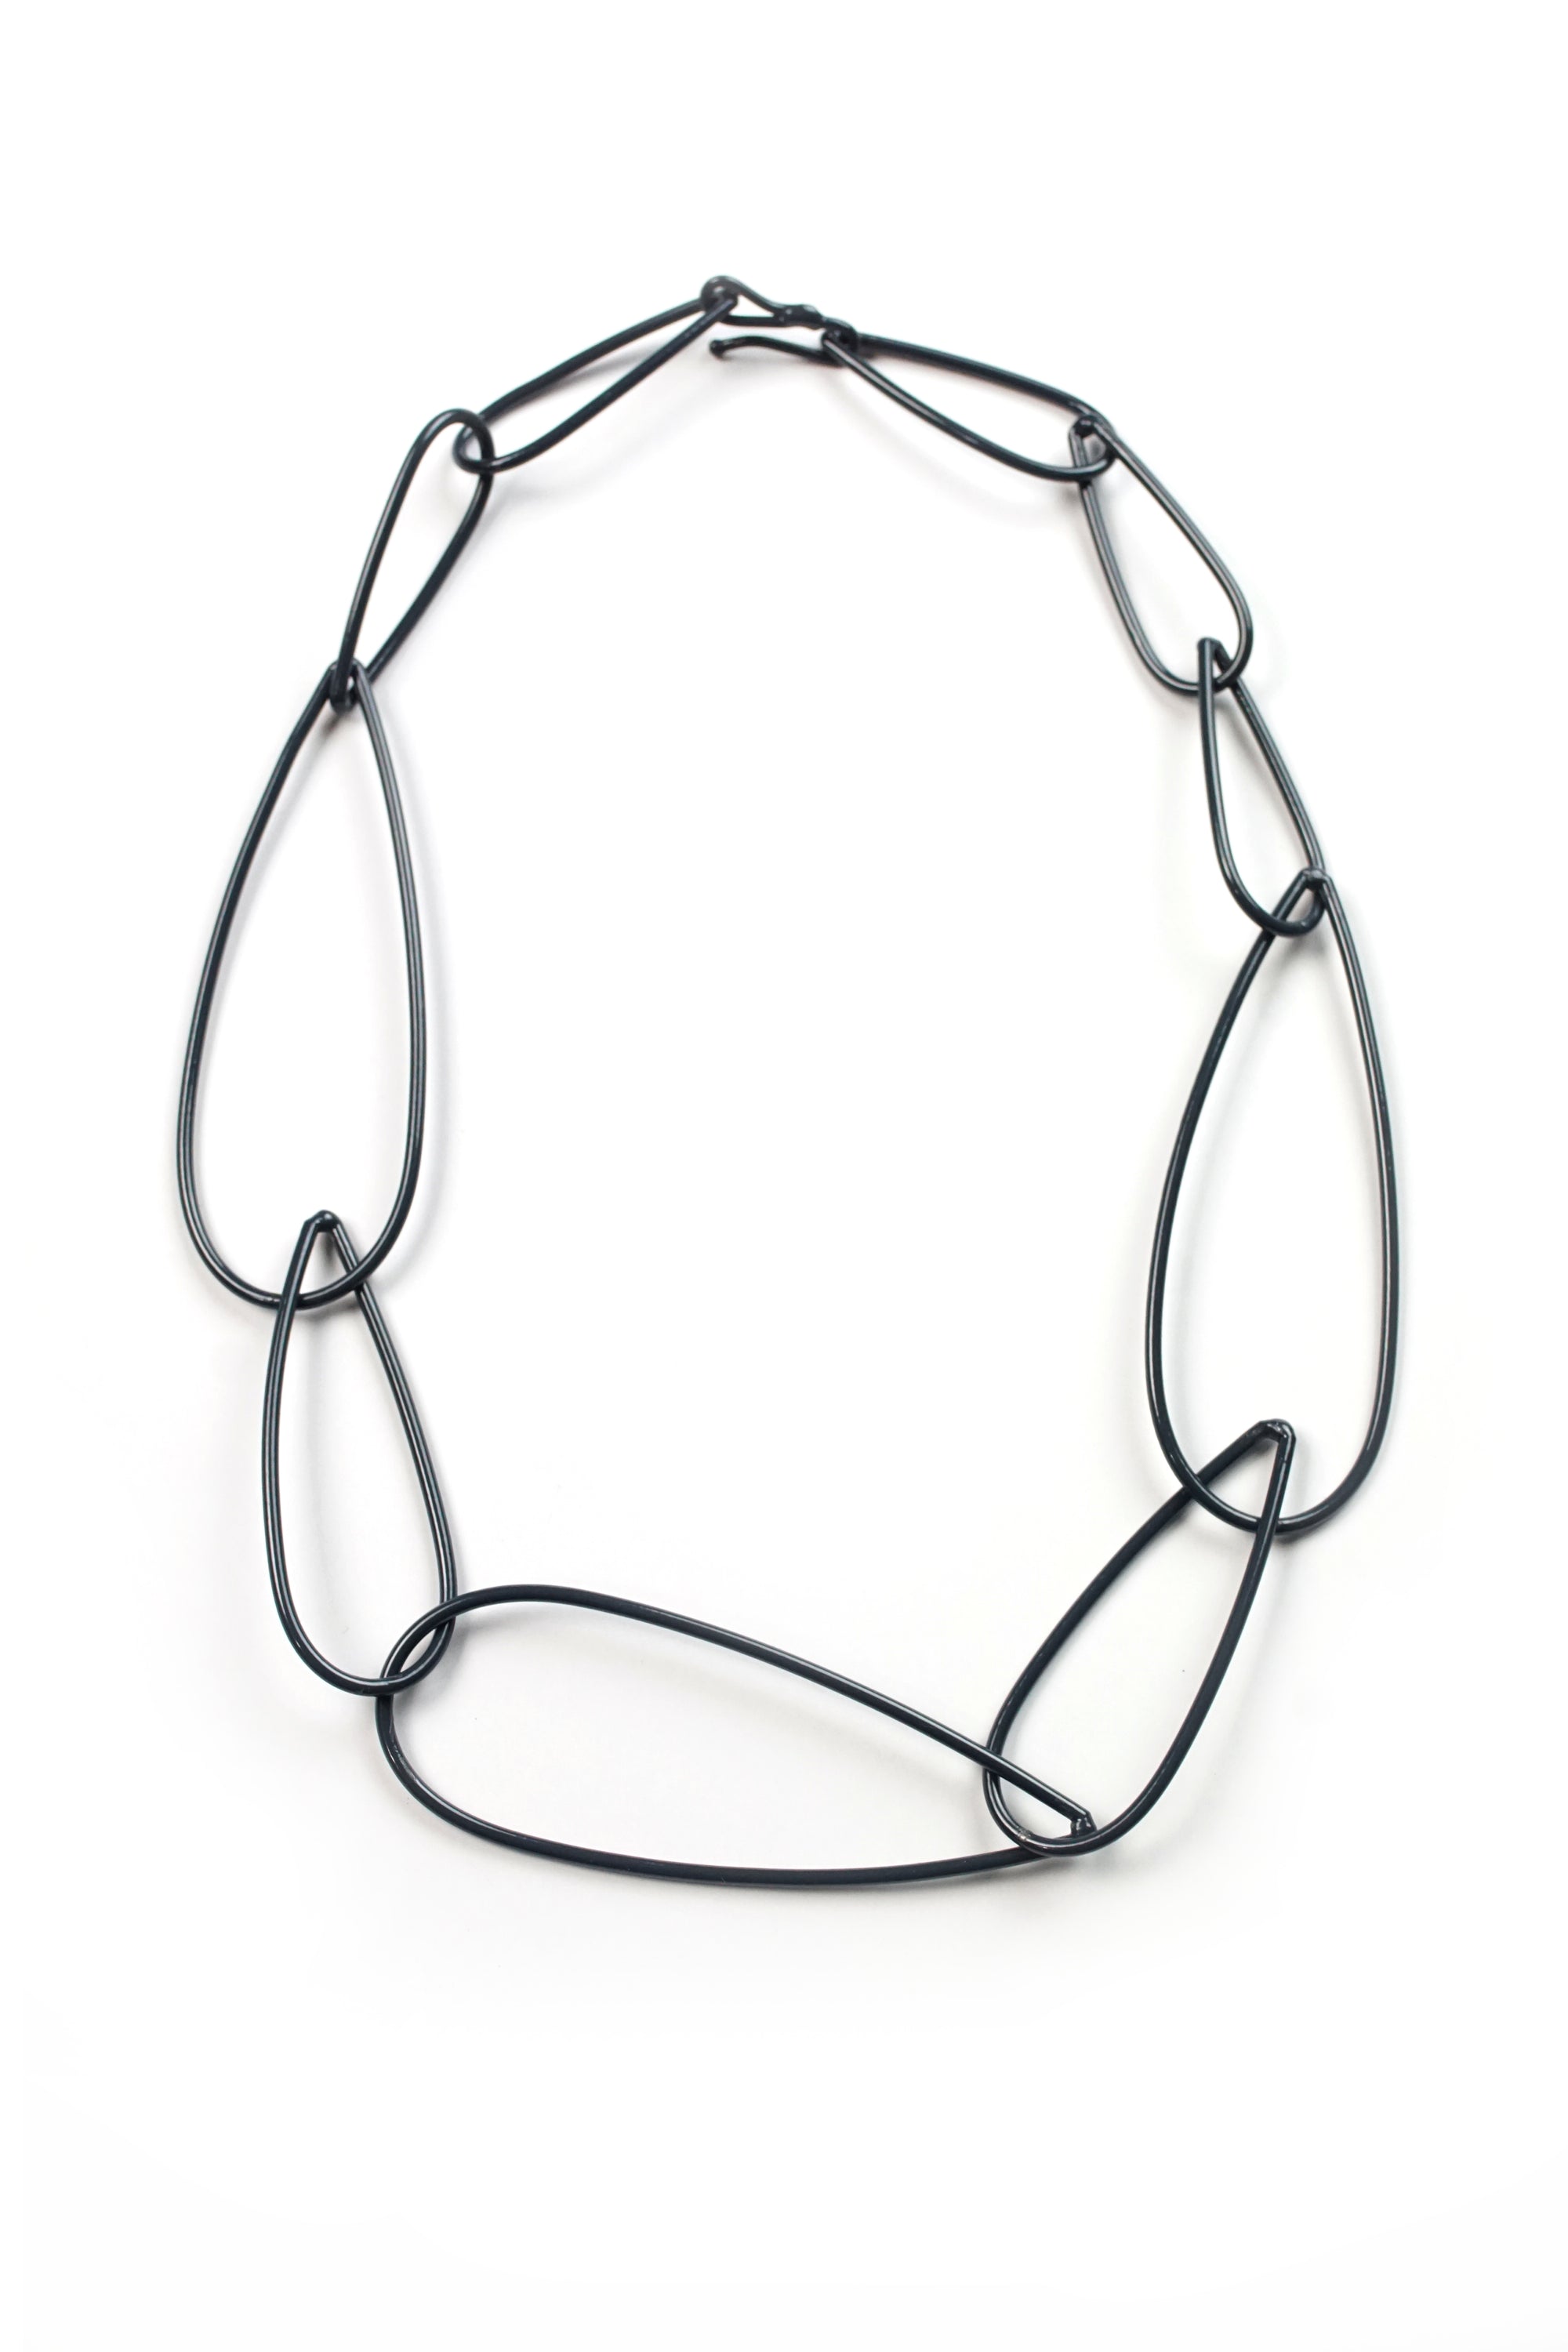 Modular Necklace No. 6 in Midnight Grey